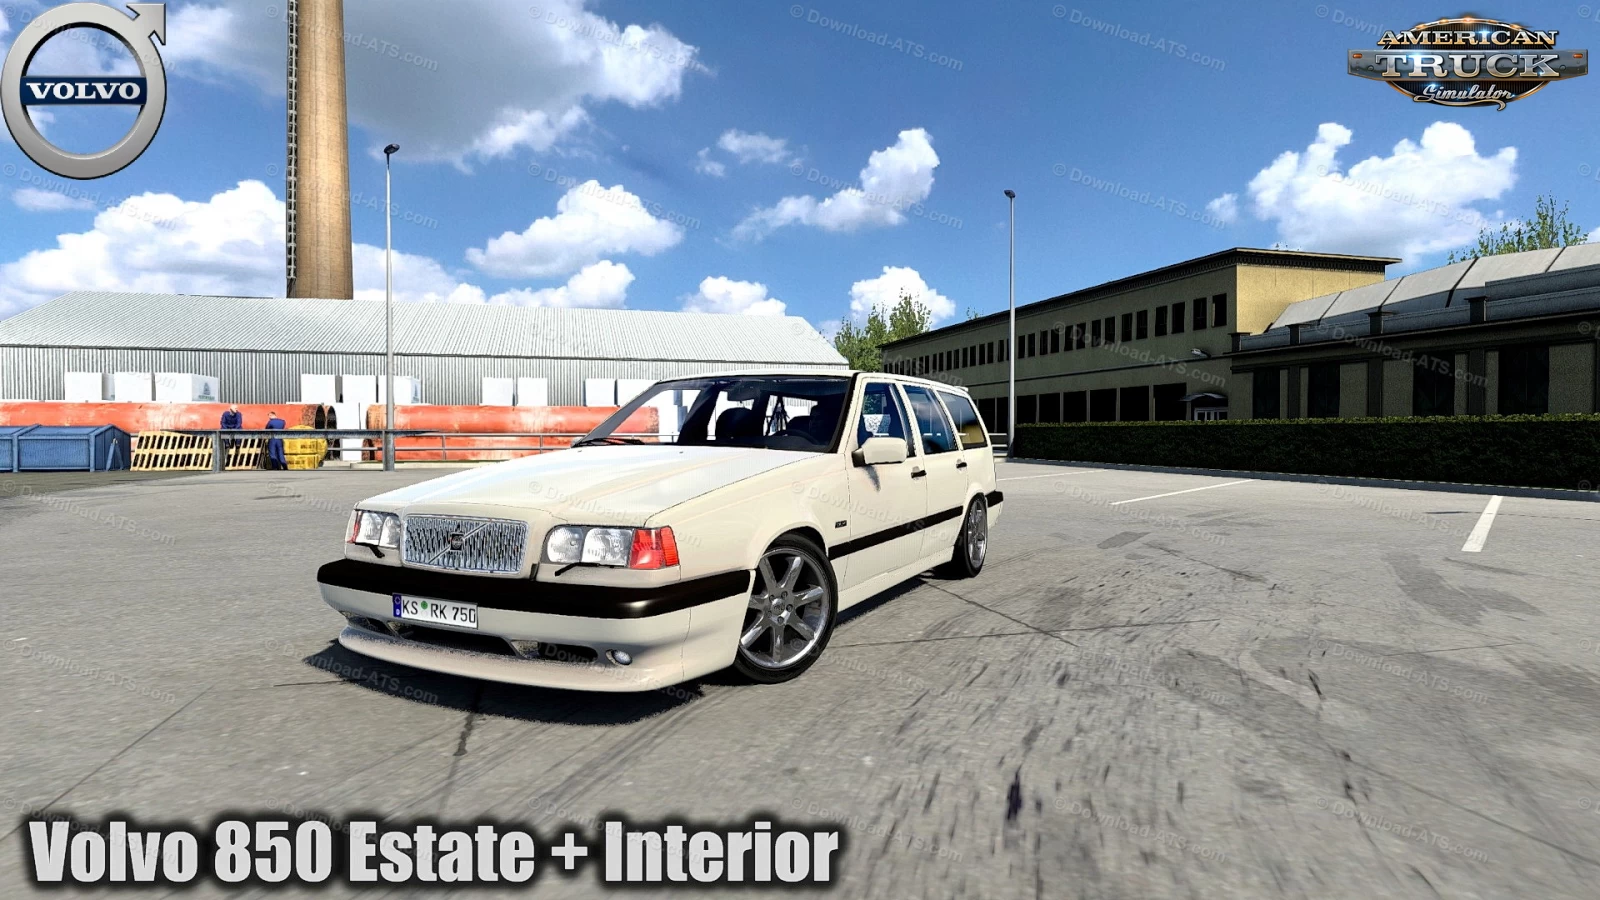 Volvo 850 Estate + Interior v2.4 (1.48.x) for ATS